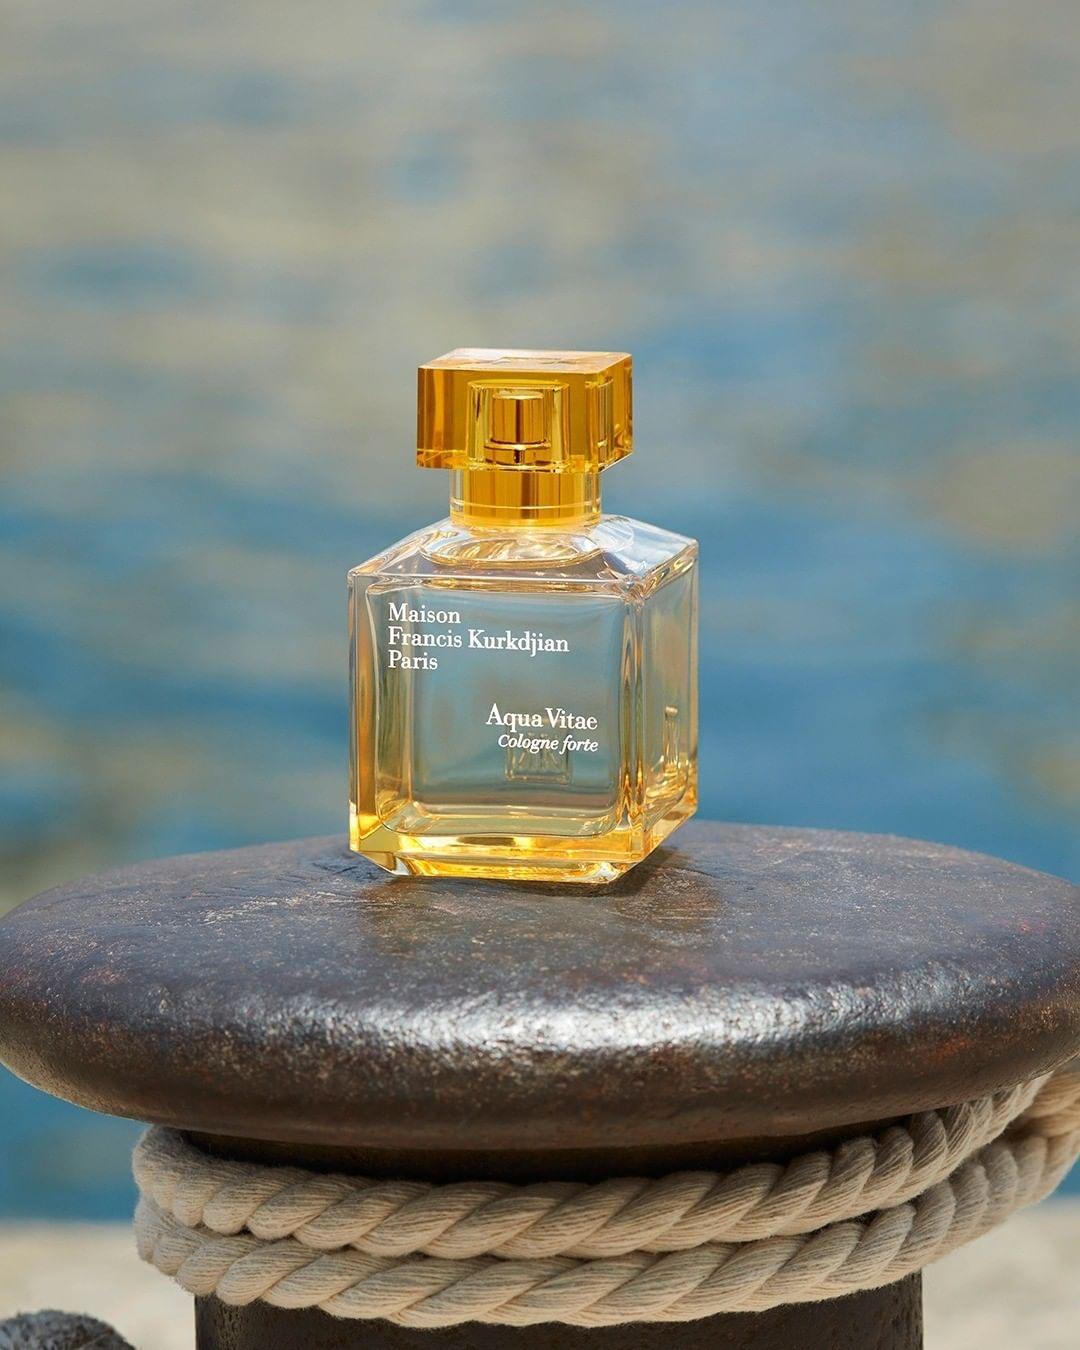 Maison Francis Kurkdjian - aqua vitae cologne forte 70 ml | Perfume Lounge